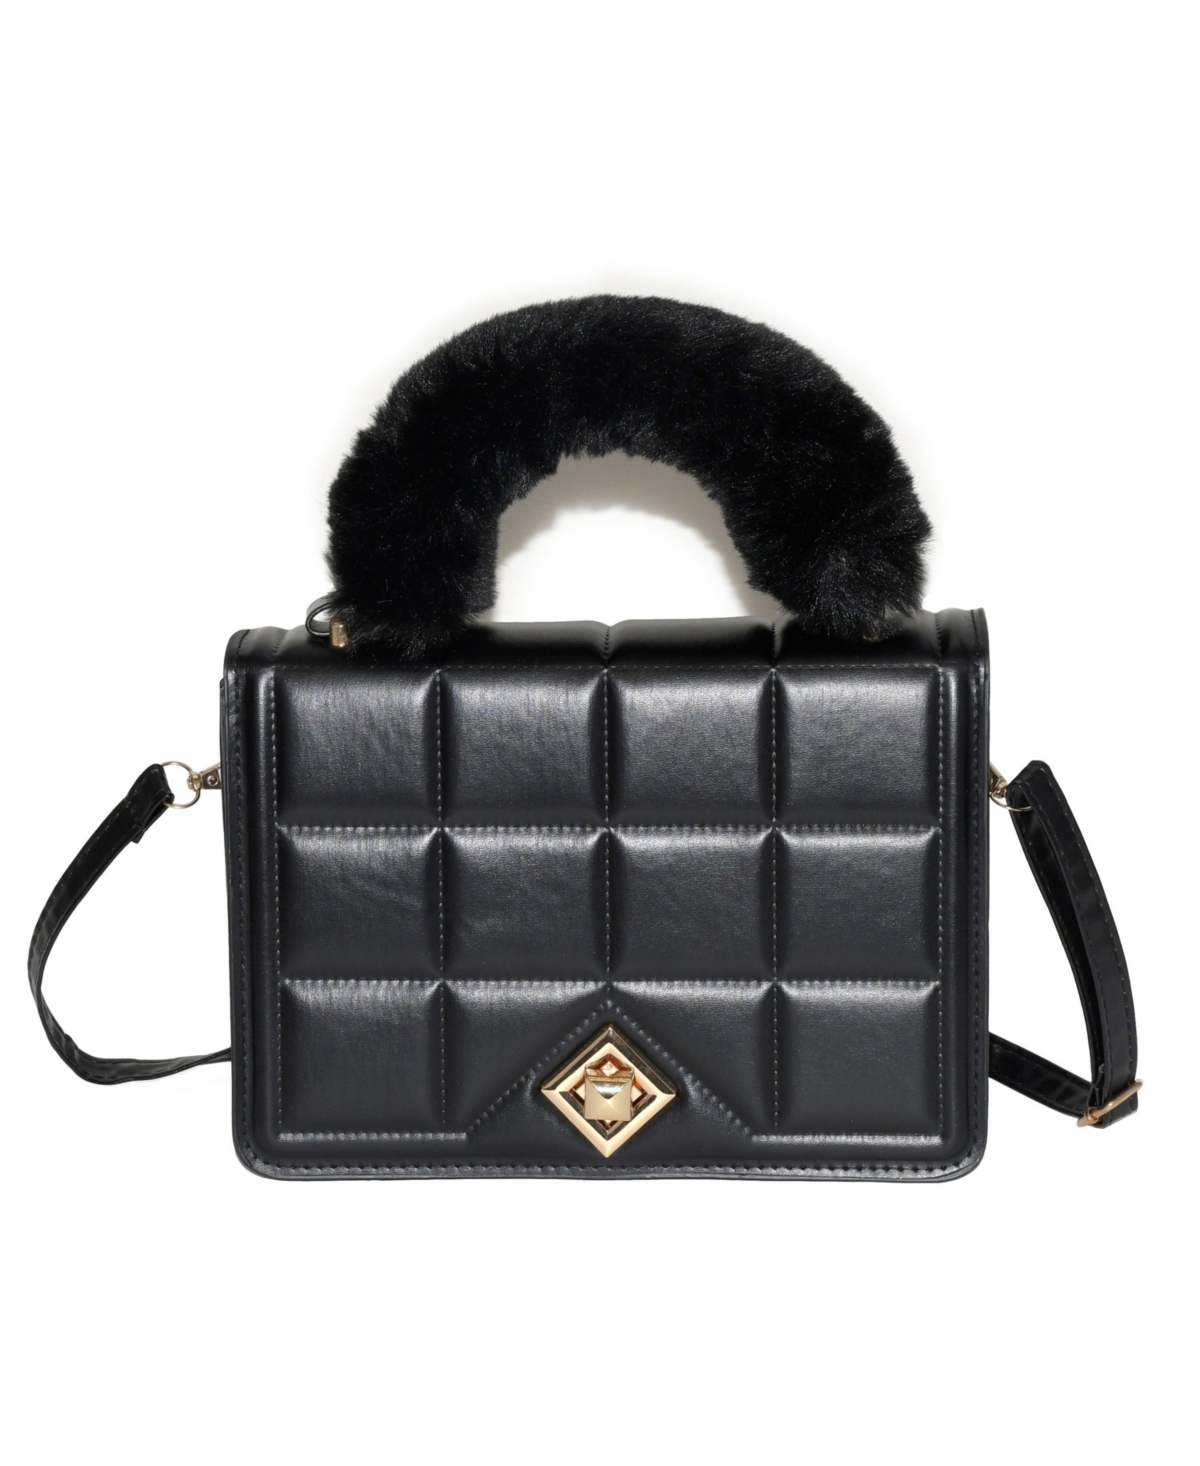 Ladies Handbag with Faux Fur Handle - Tan